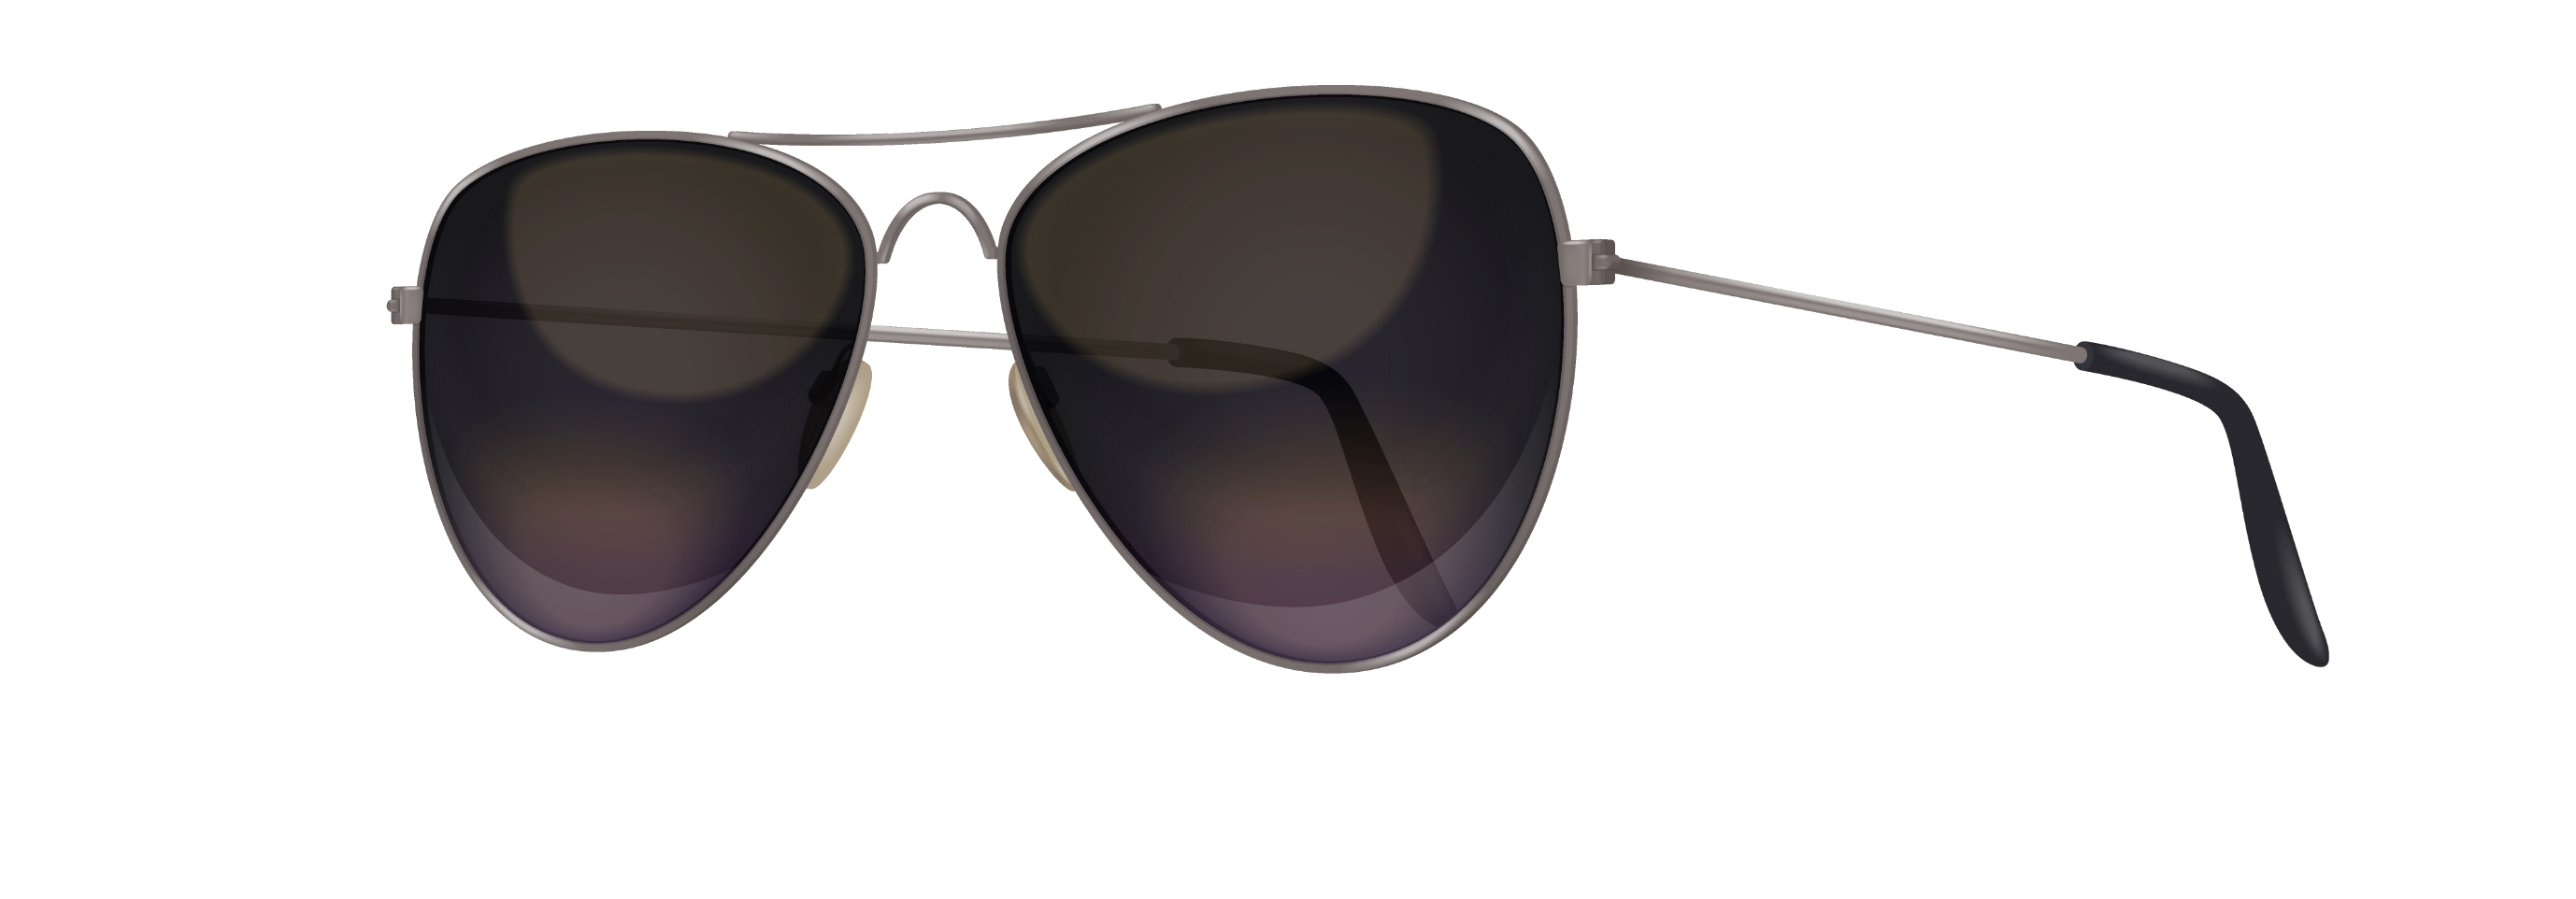 sunglasses-40